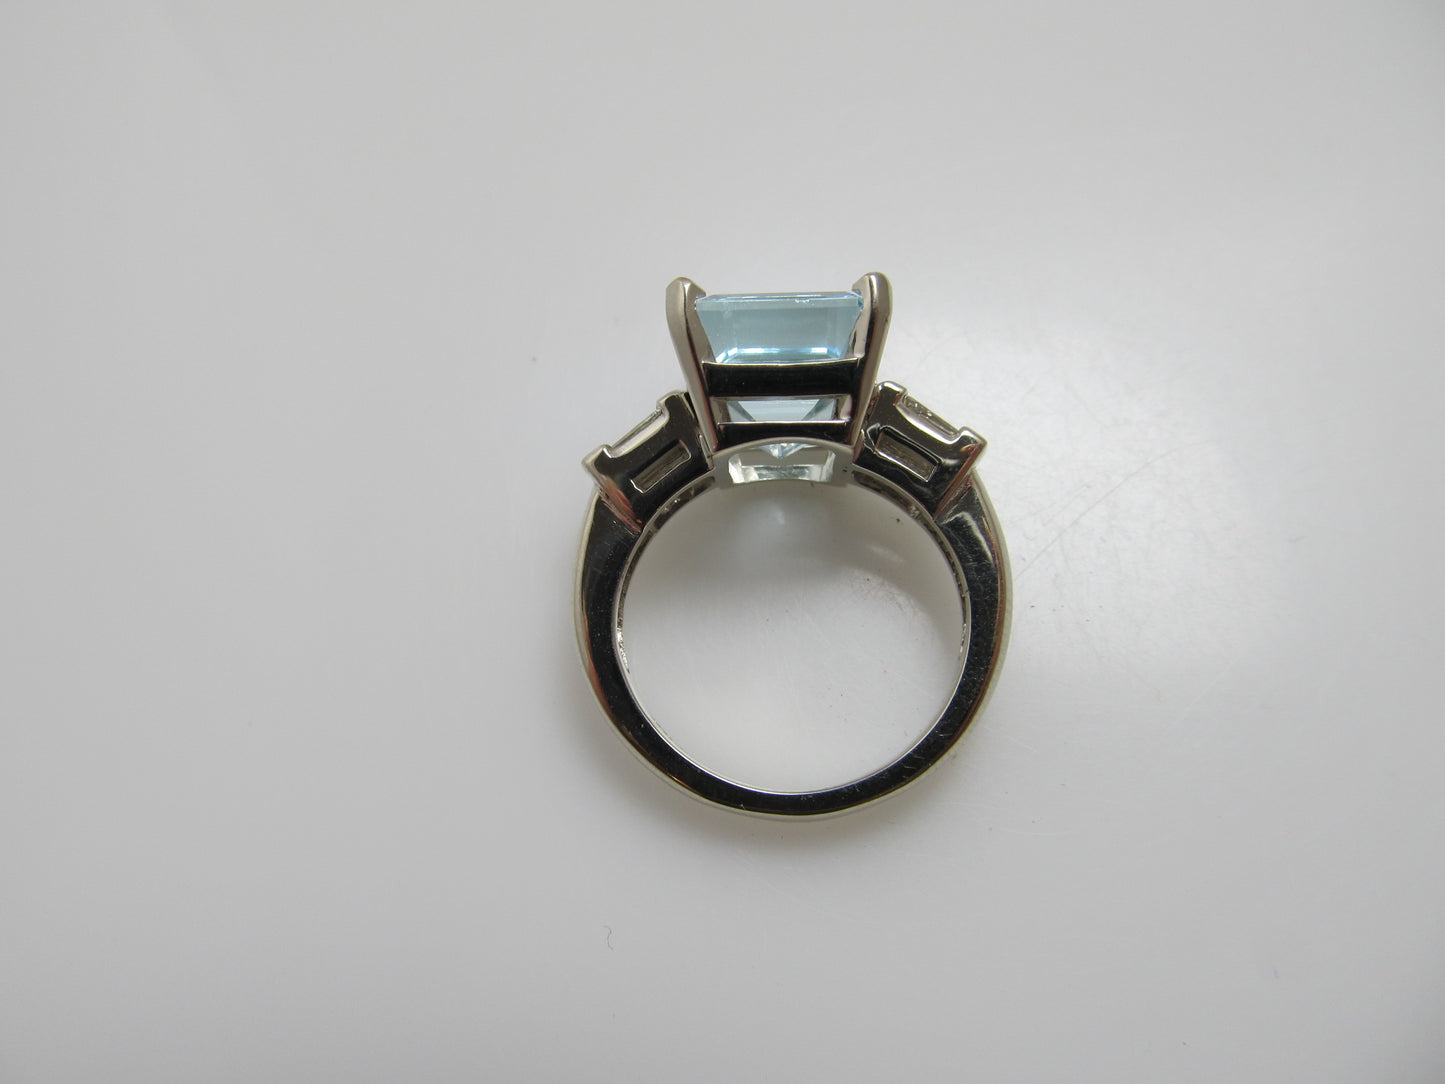 Great 14k white gold aquamarine diamond ring